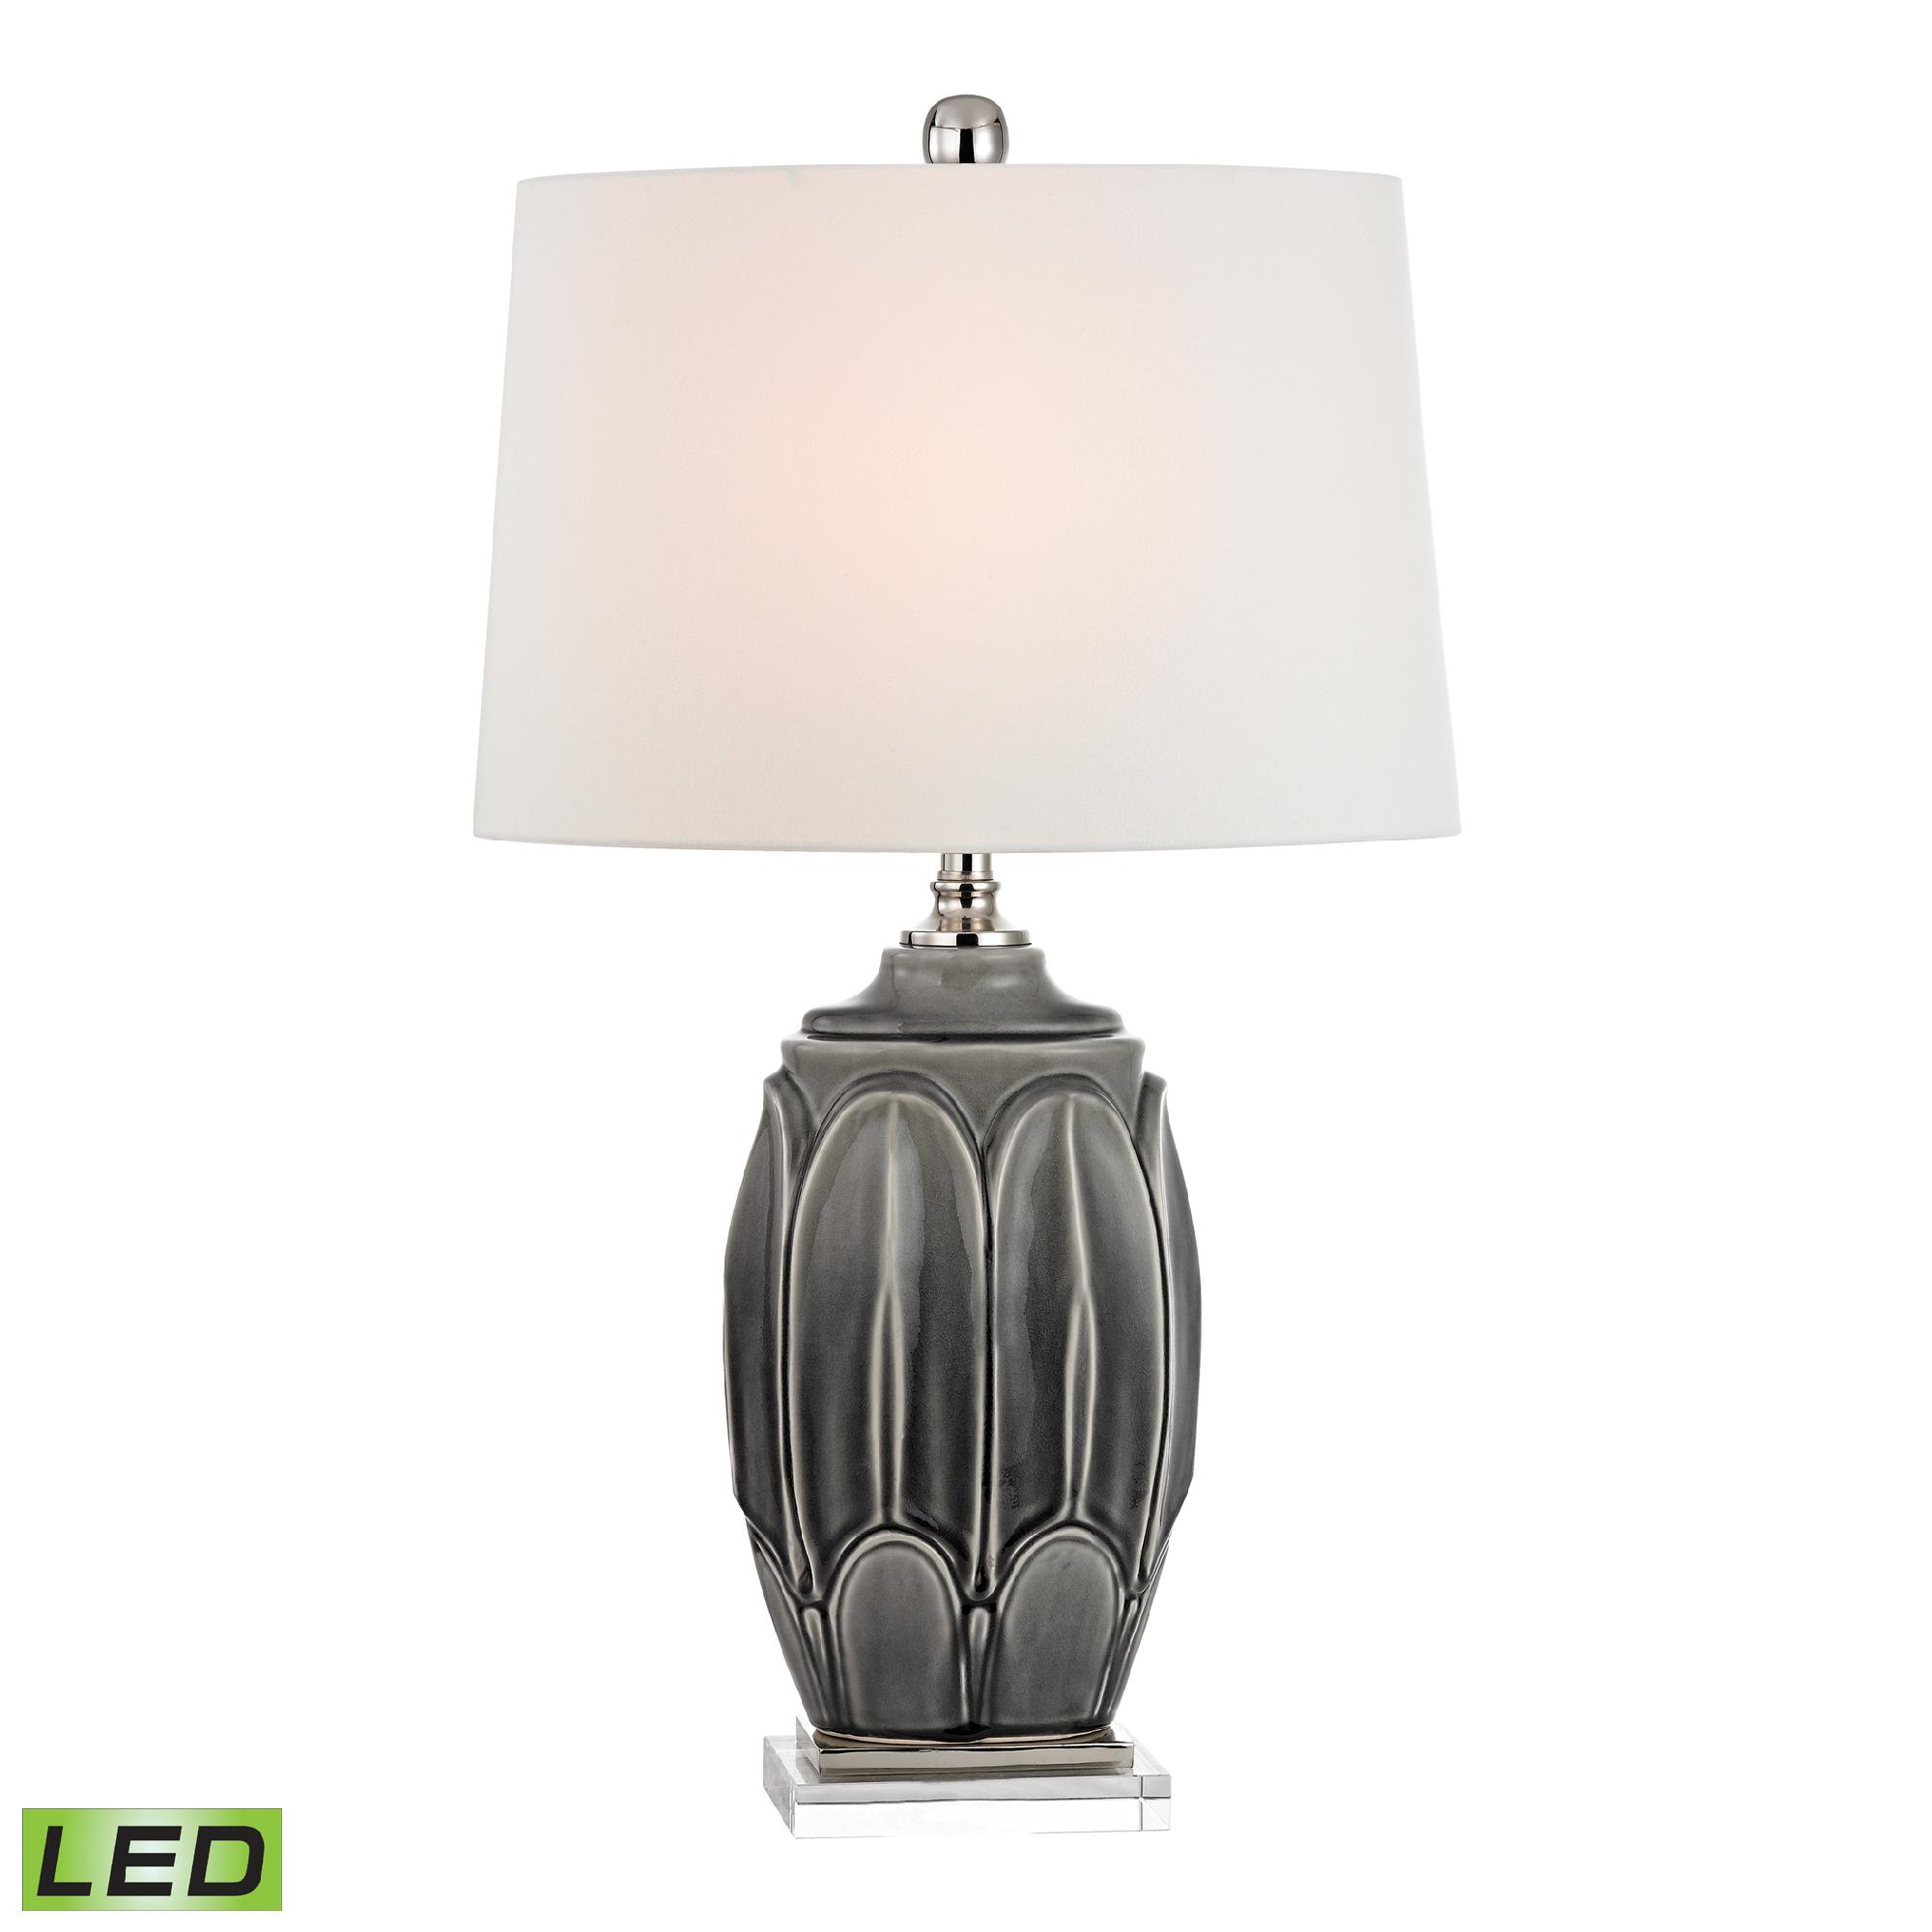 Dimond Landry Table Lamp - LED